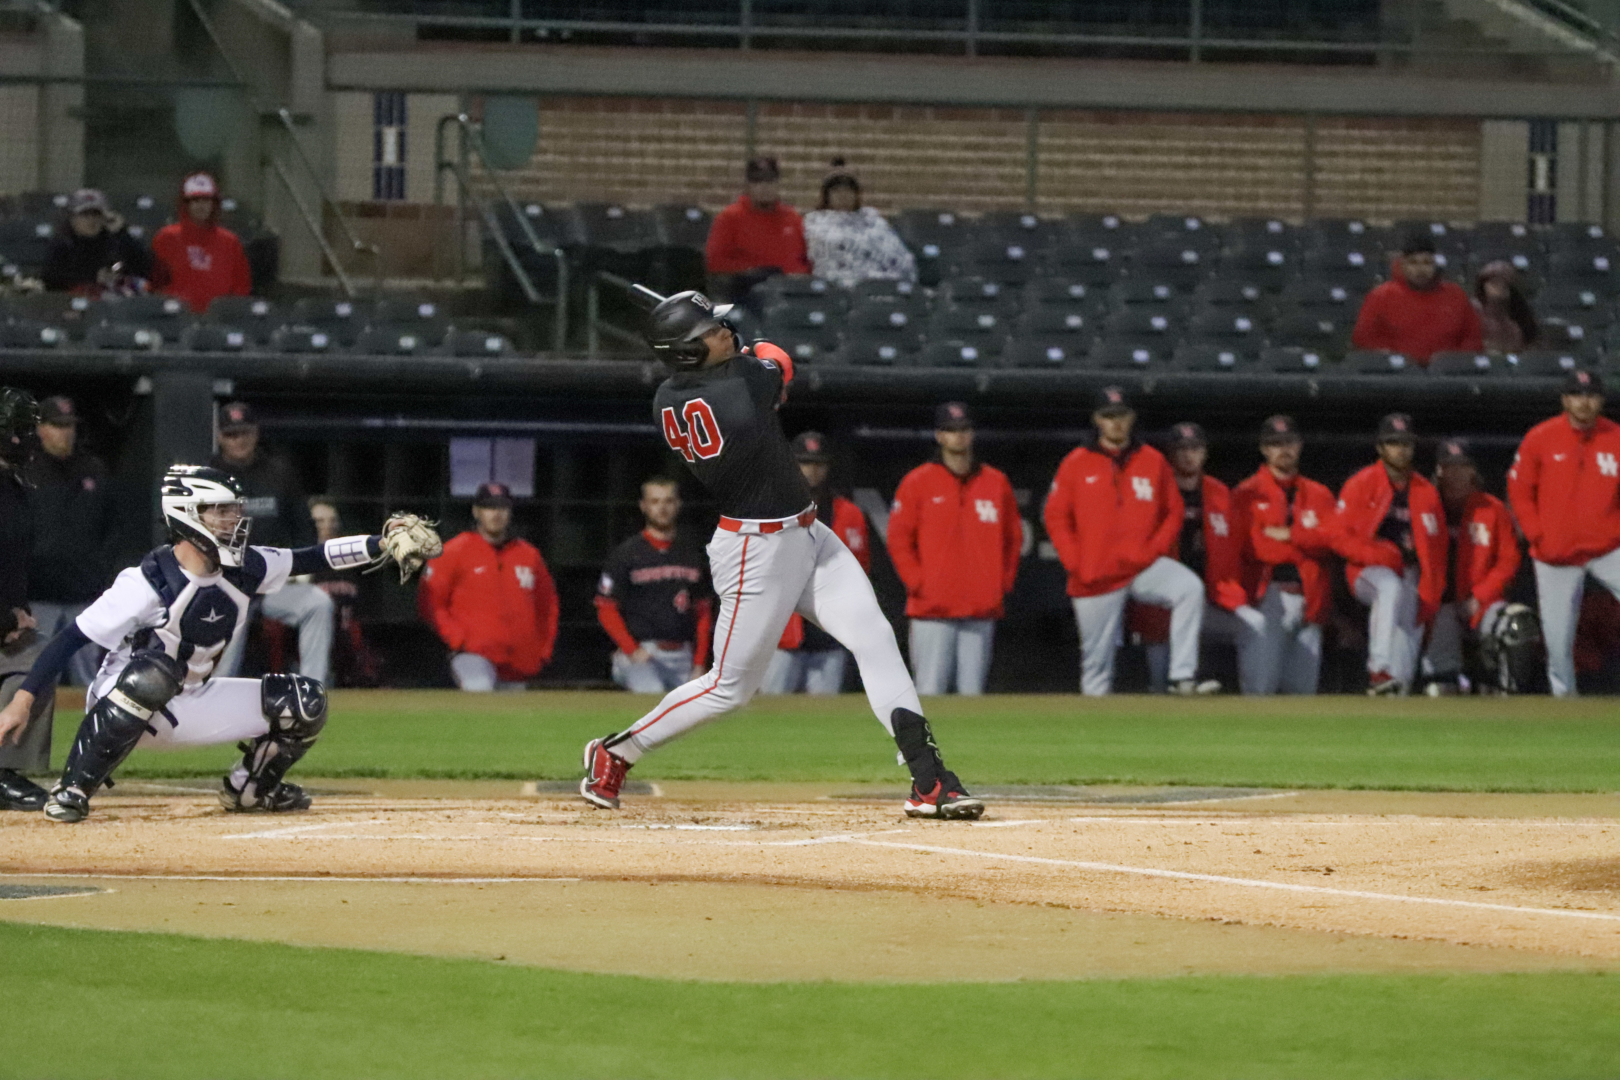 Senior first baseman Ryan Hernandez hit his third home run of the season in UH baseball's series-clinching win over Western Carolina on Suday. | James Mueller/The Cougar